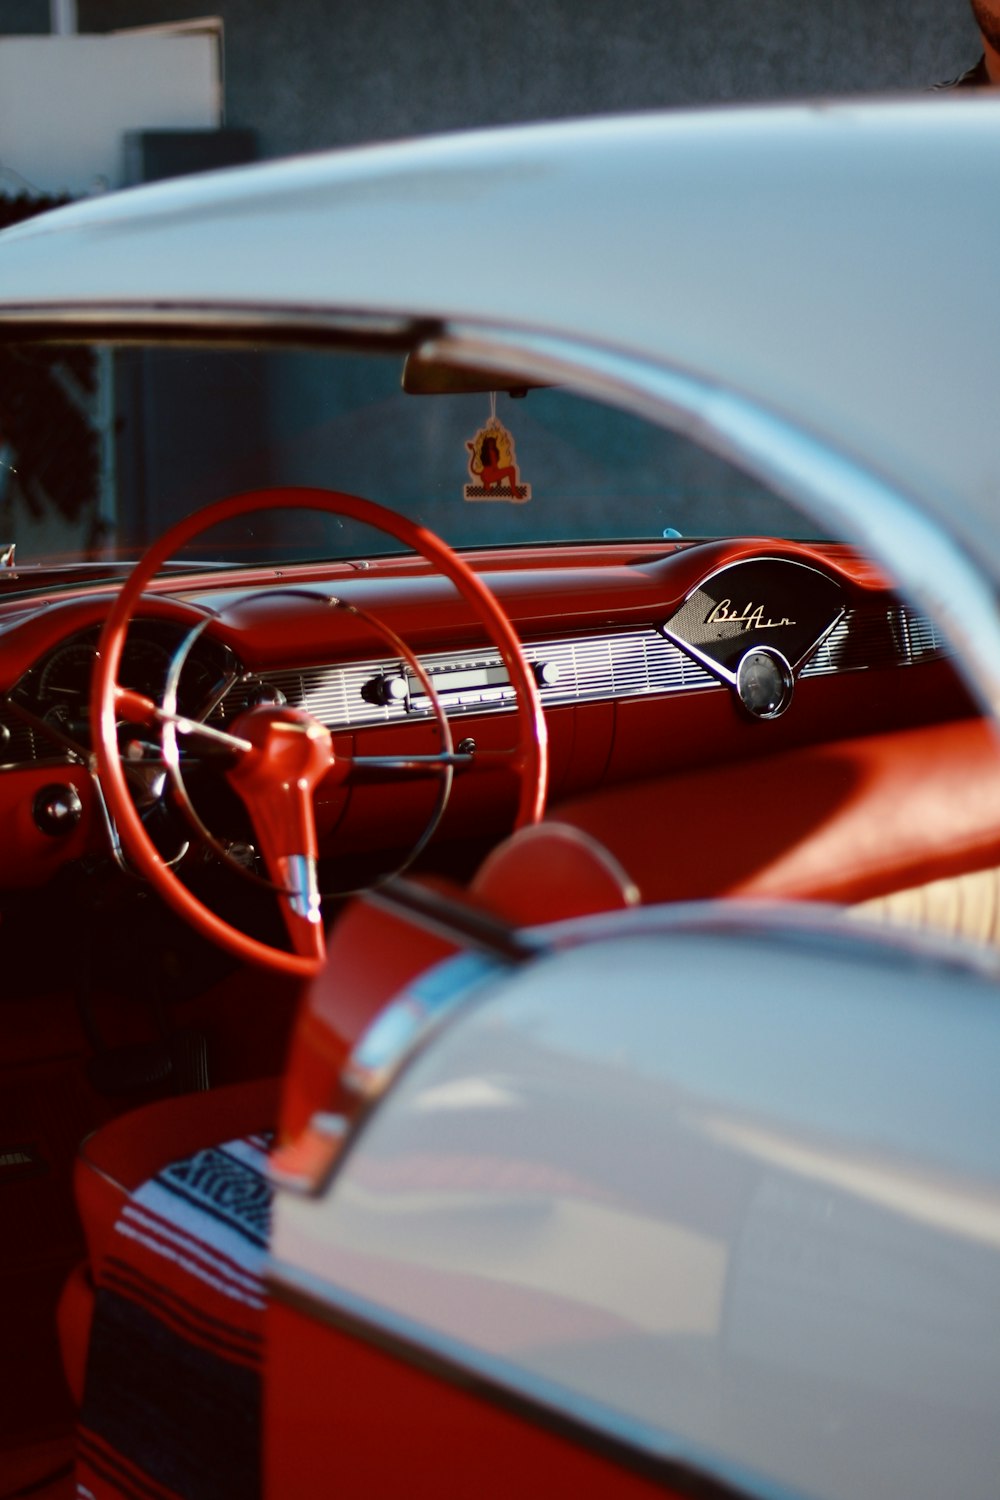 red and black steering wheel